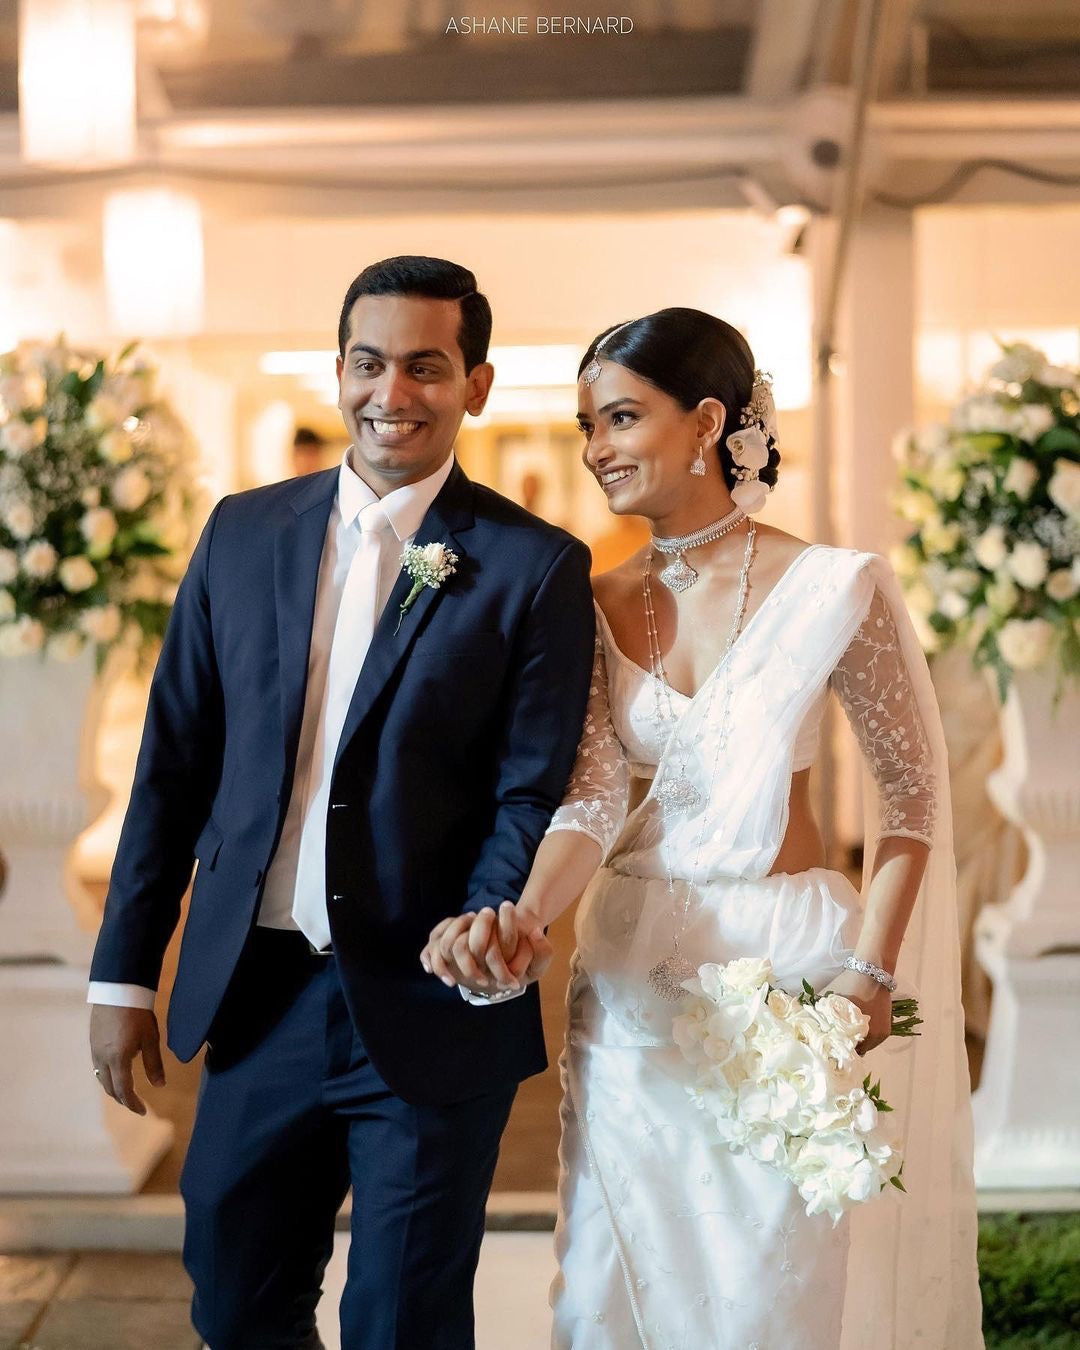 45,628+ Wedding Saree Pictures | Download Free Images on Unsplash